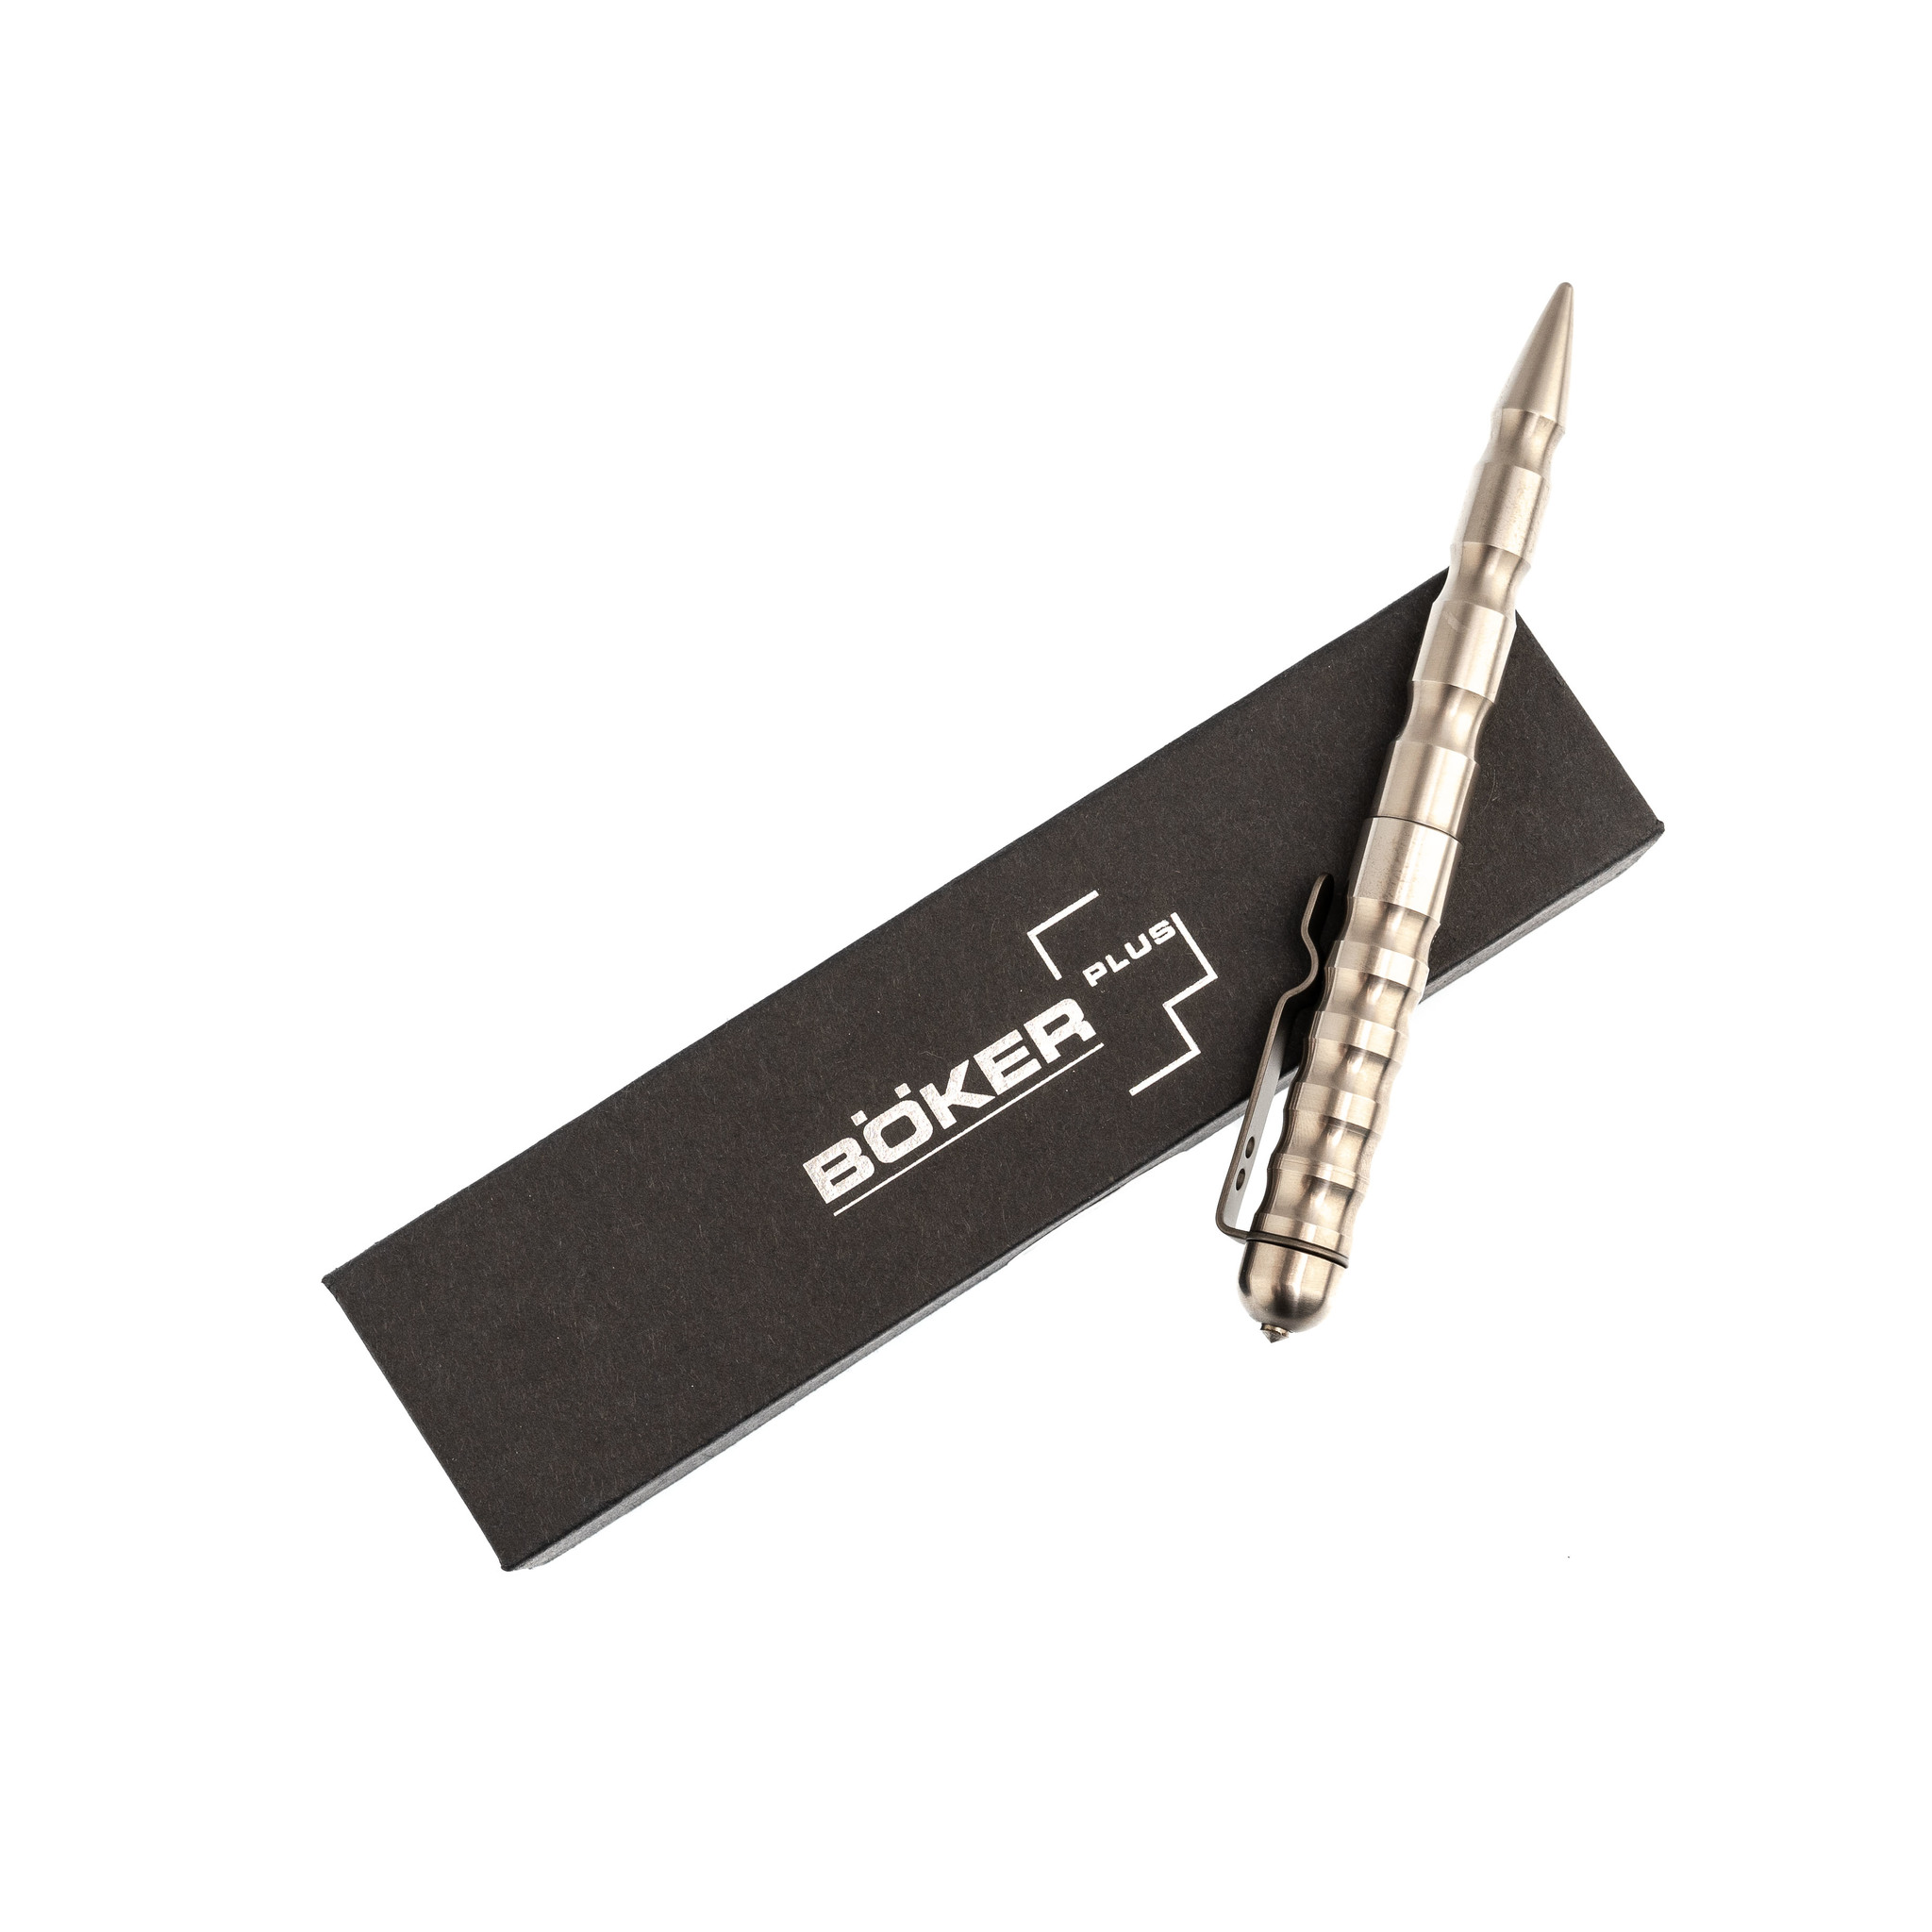 Тактическая ручка MPP Titanium (Multi Purpose Pen Titan), Boker Plus 09BO066, серебристая. Фото №7